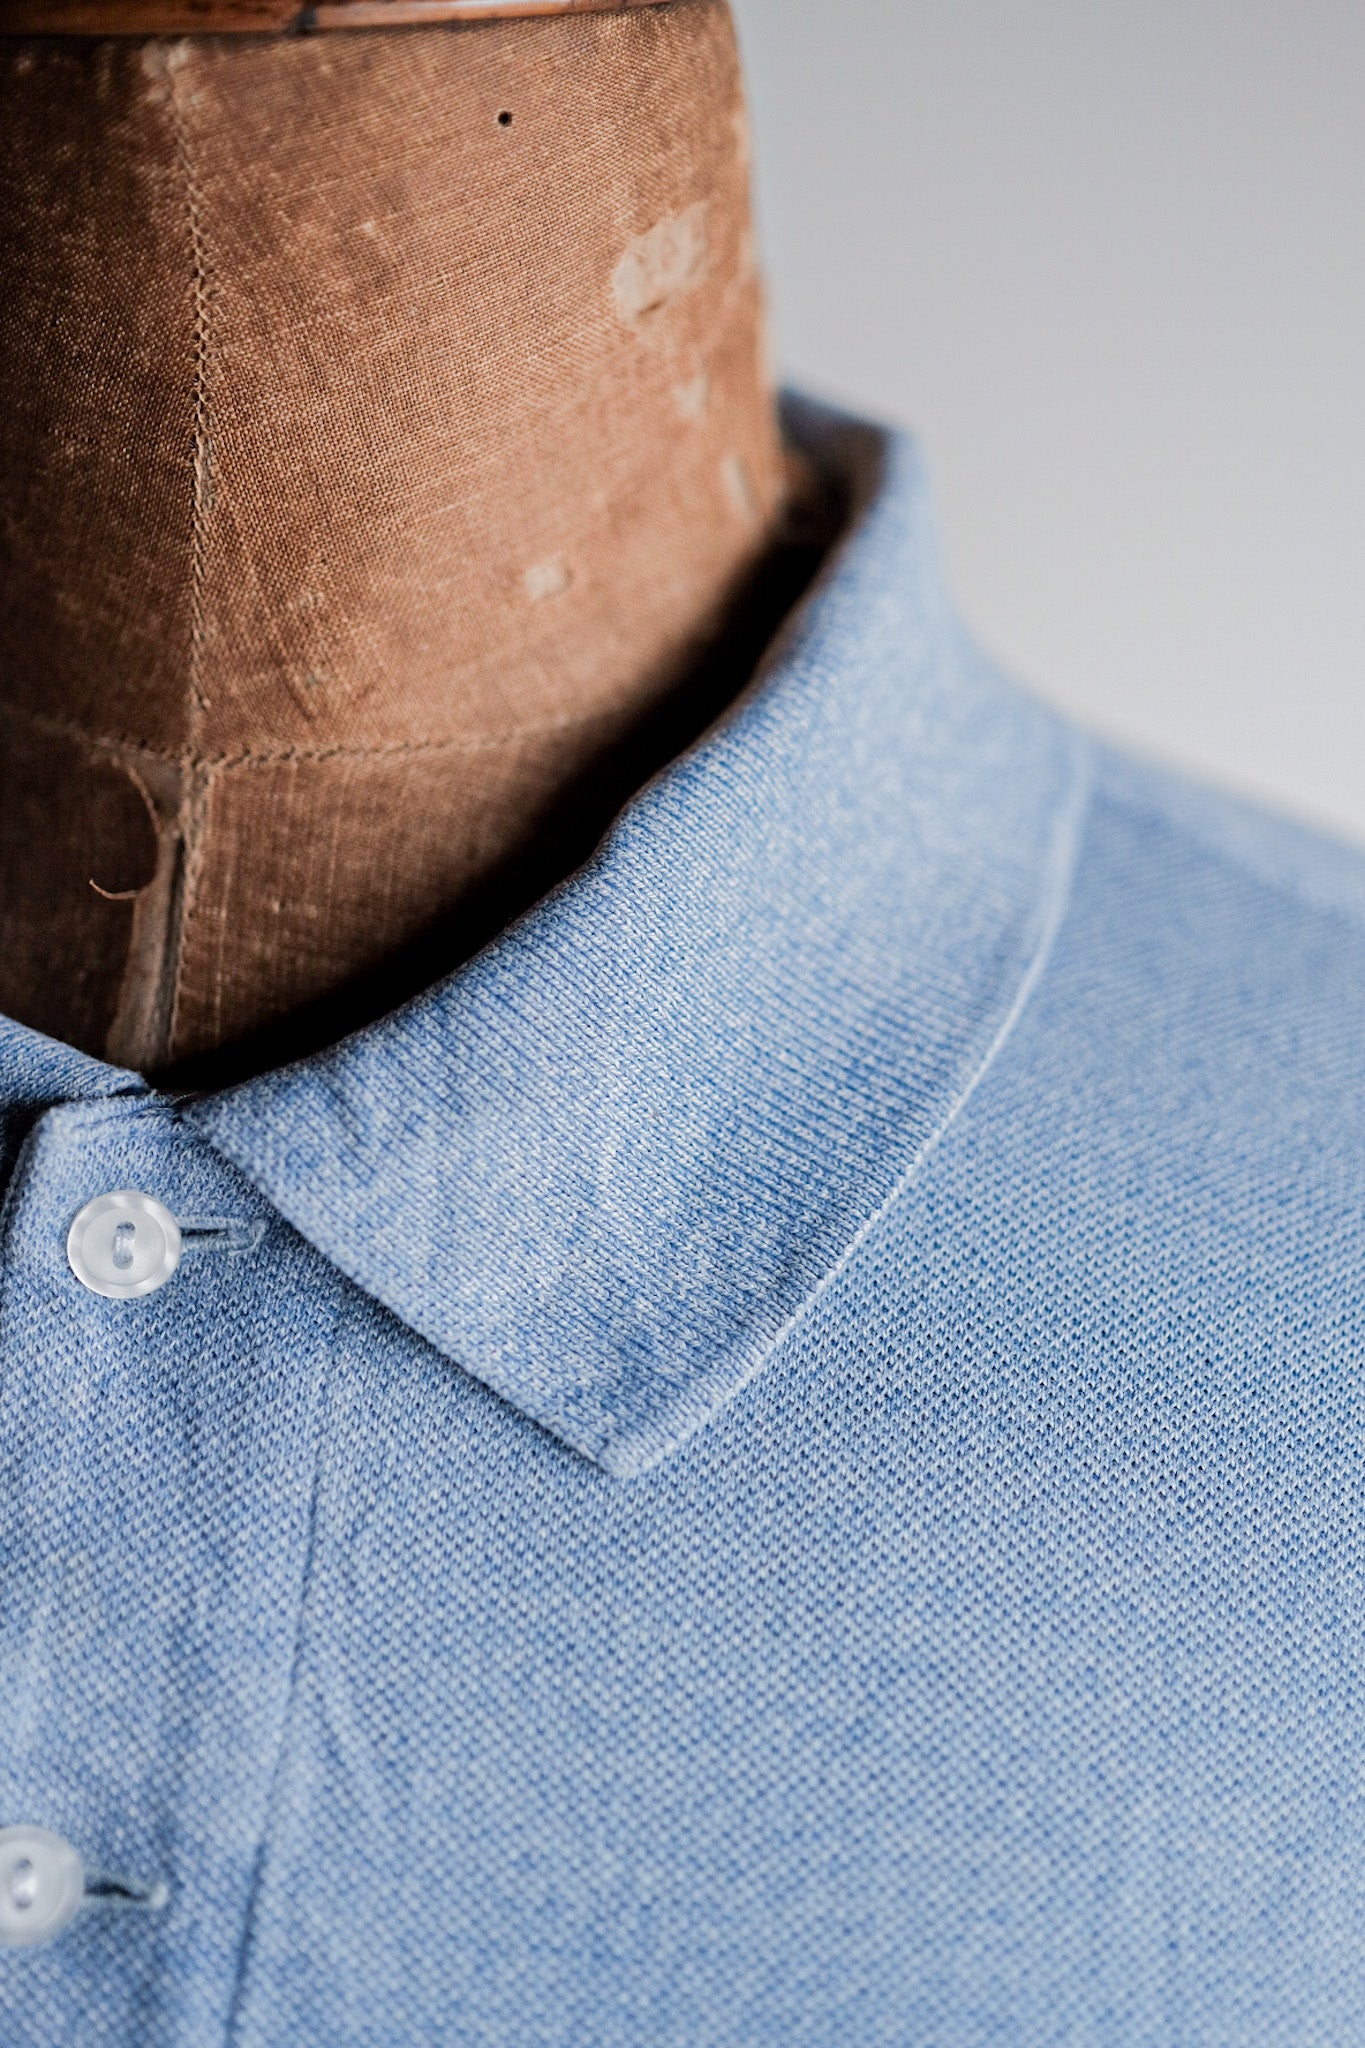 【~80's】CHEMISE LACOSTE L/S Polo Shirt Size.5 "Marbling Light Blue"